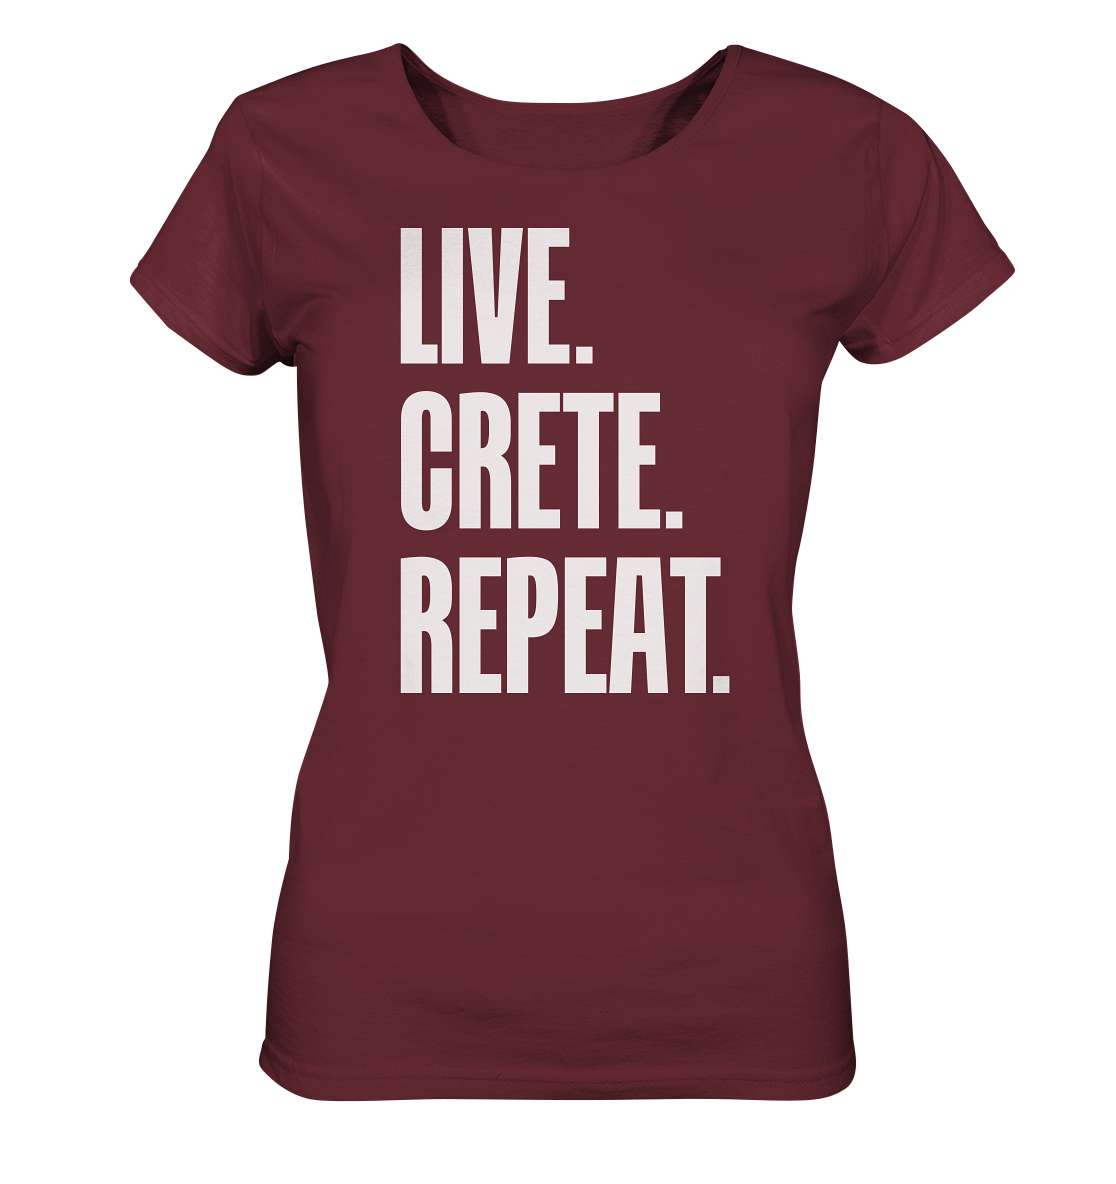 LIVE. CRETE. REPEAT. - Ladies Organic Shirt